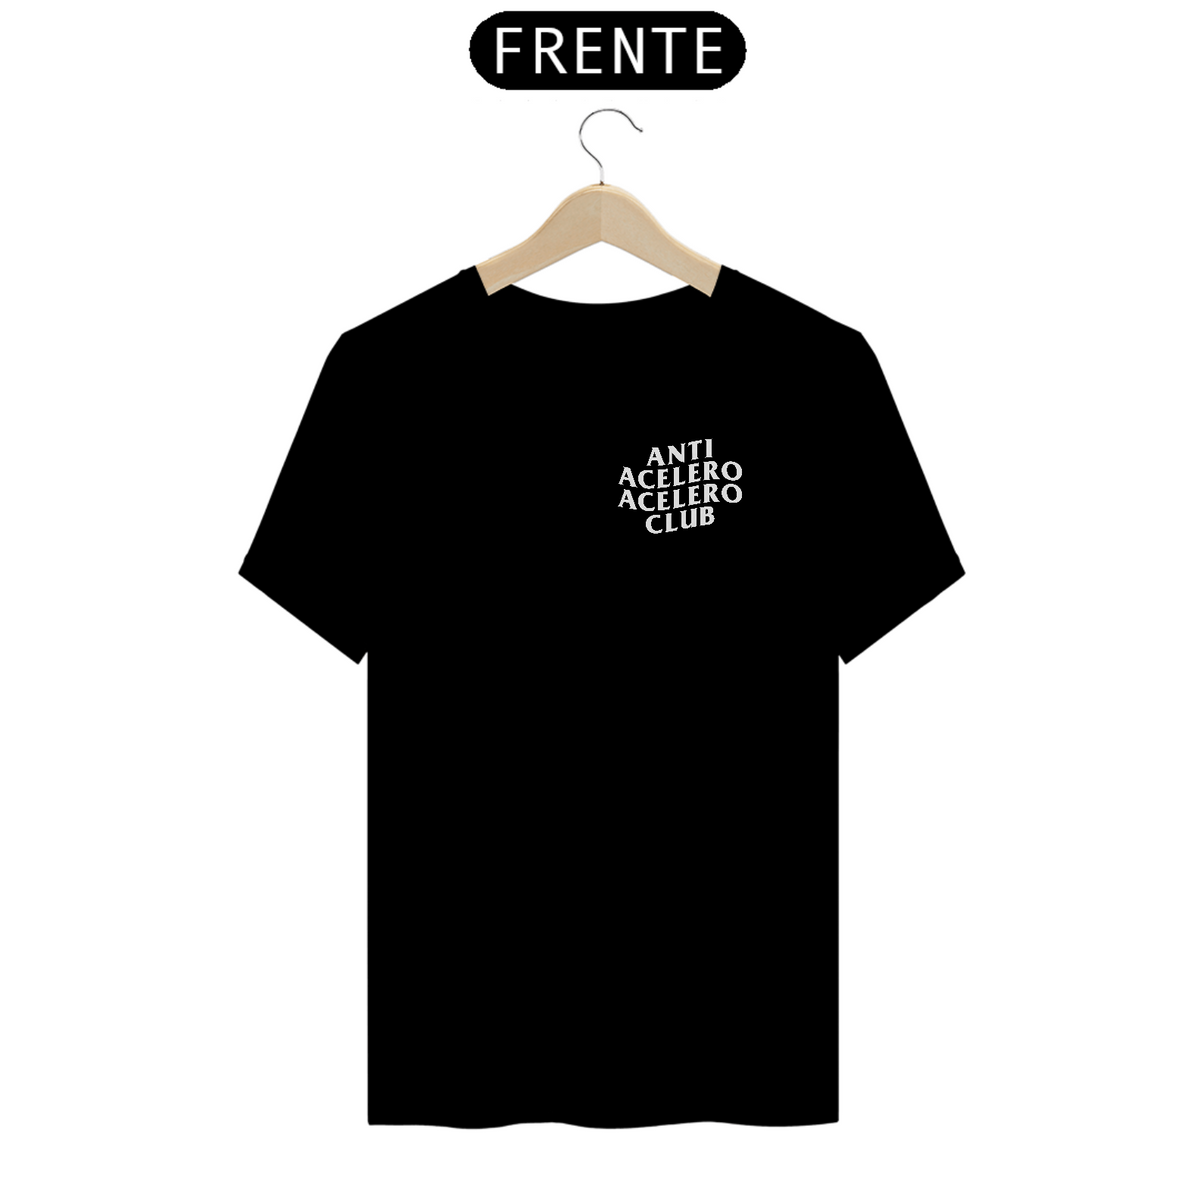 Nome do produto: Camiseta Anti Acelero Acelero Club - Frente